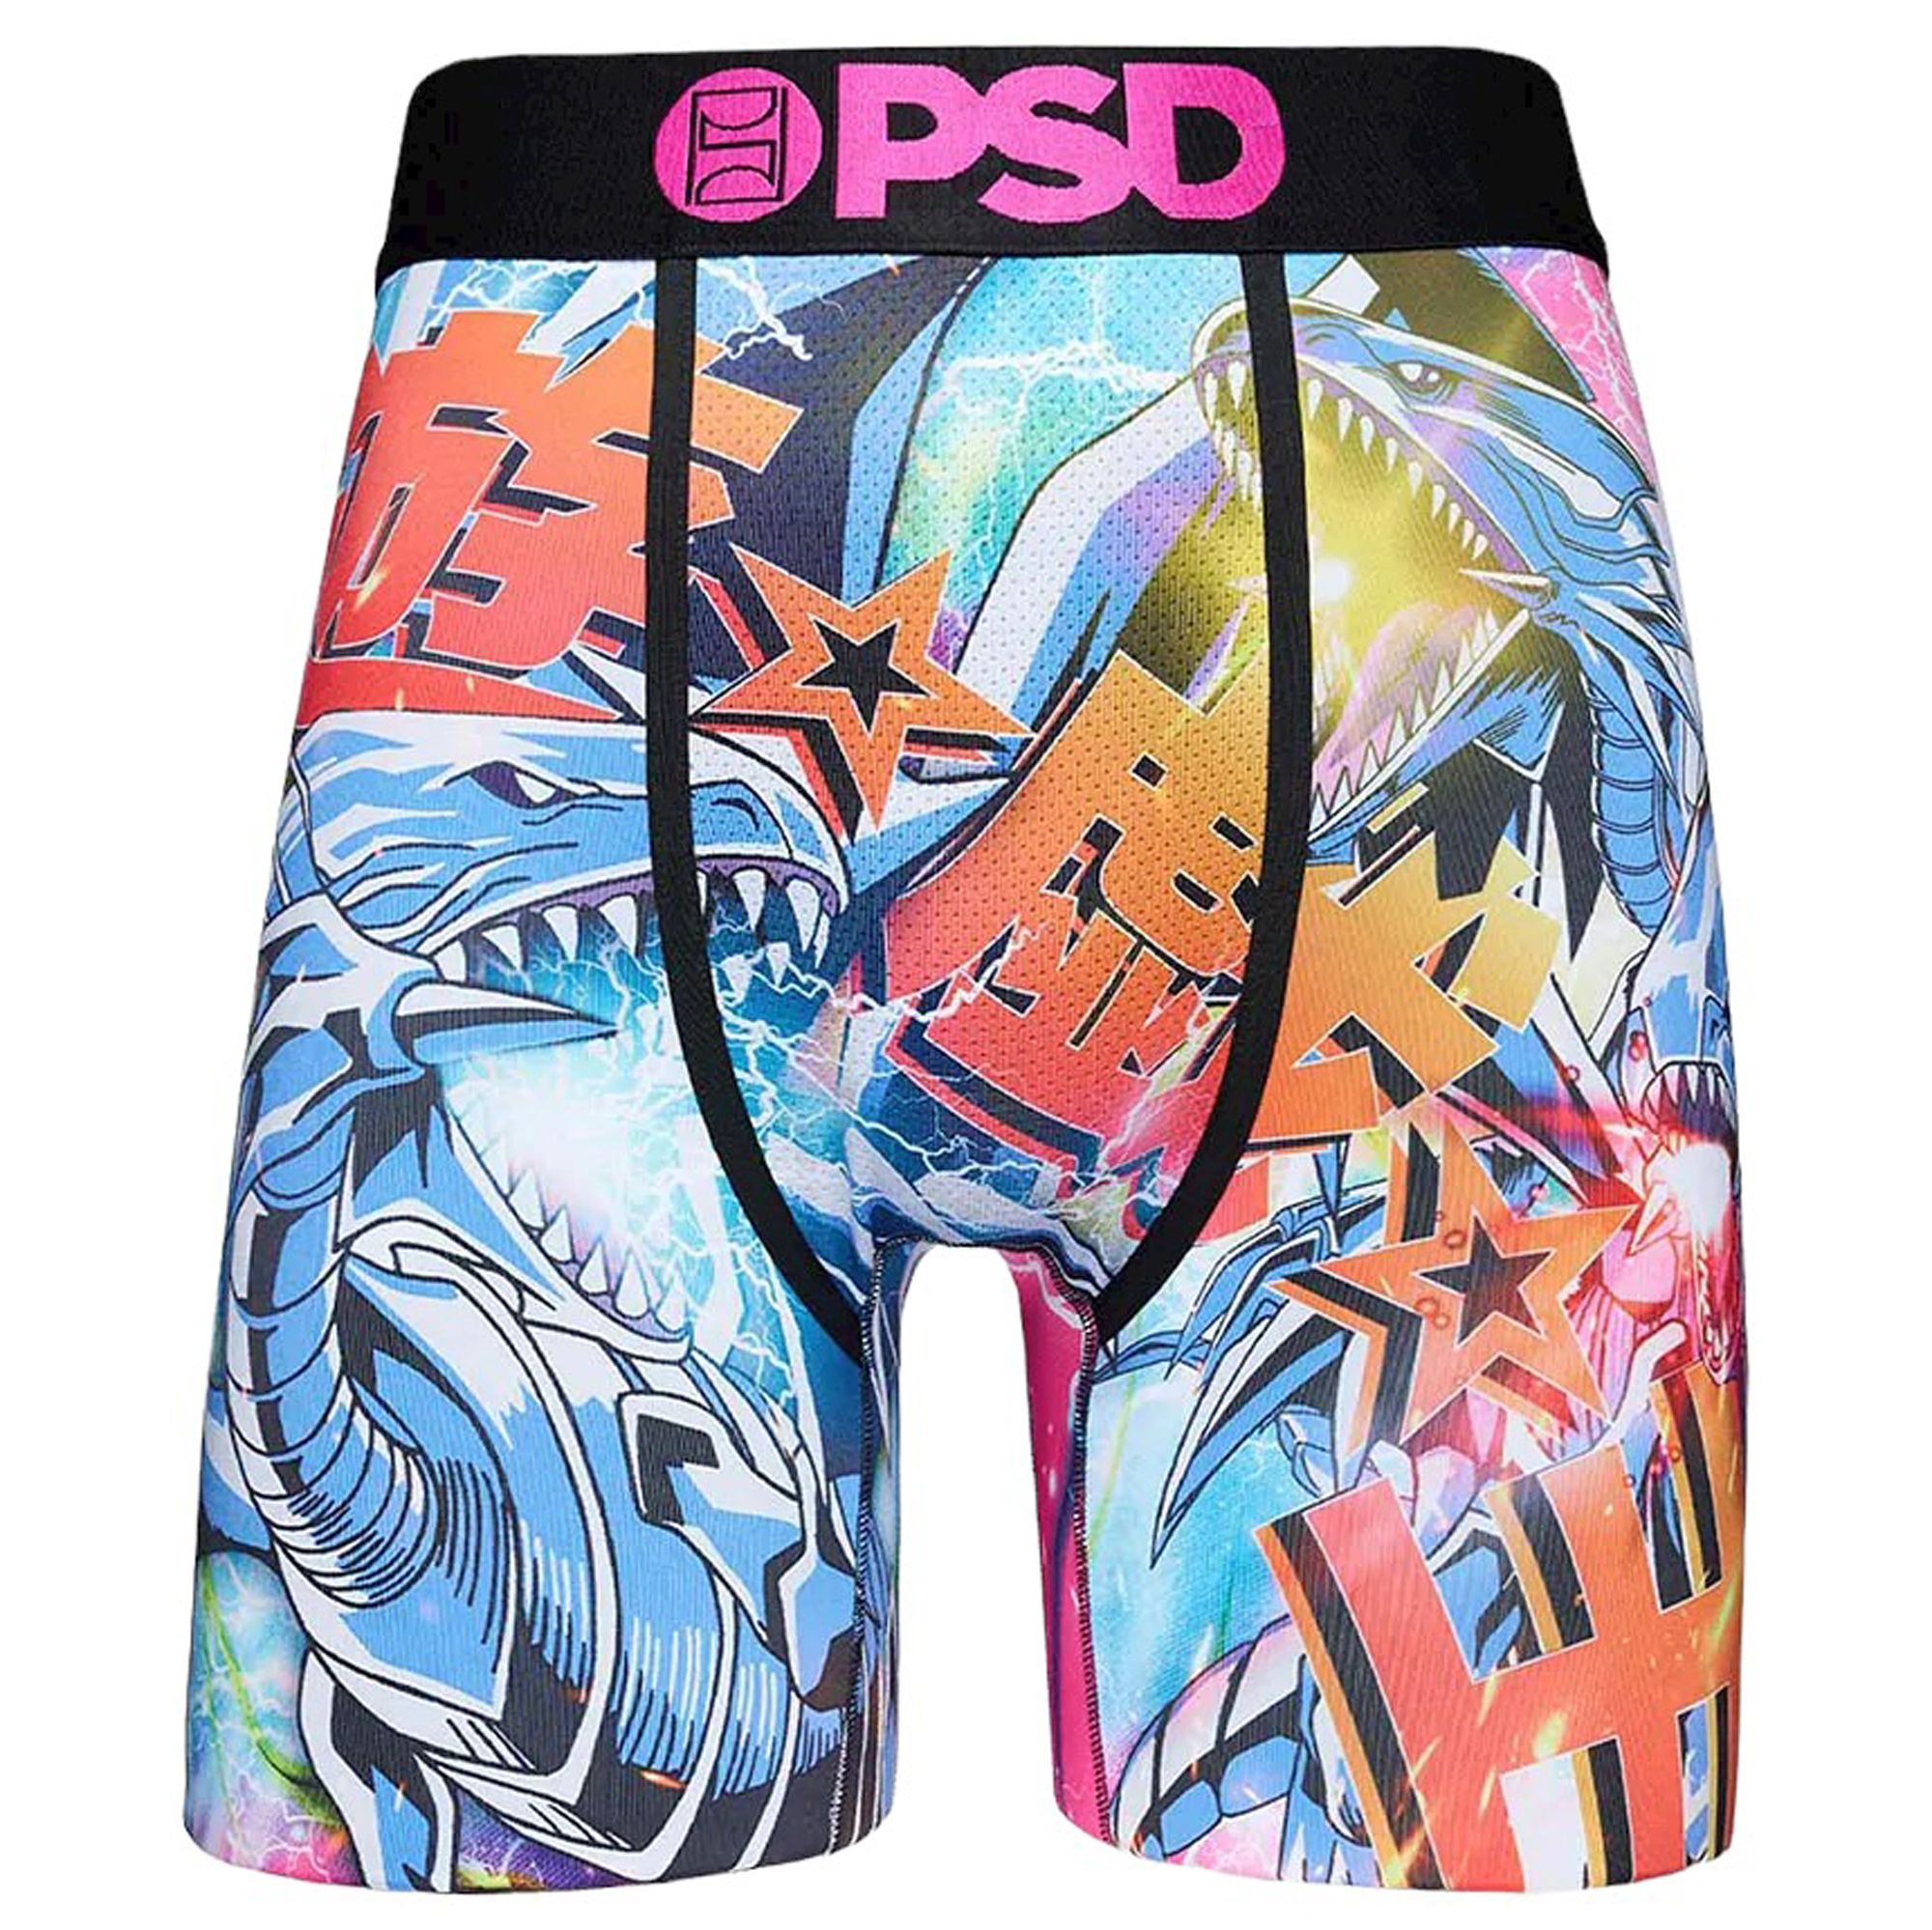 Psd Underwear Meaning - Boxers - AliExpress